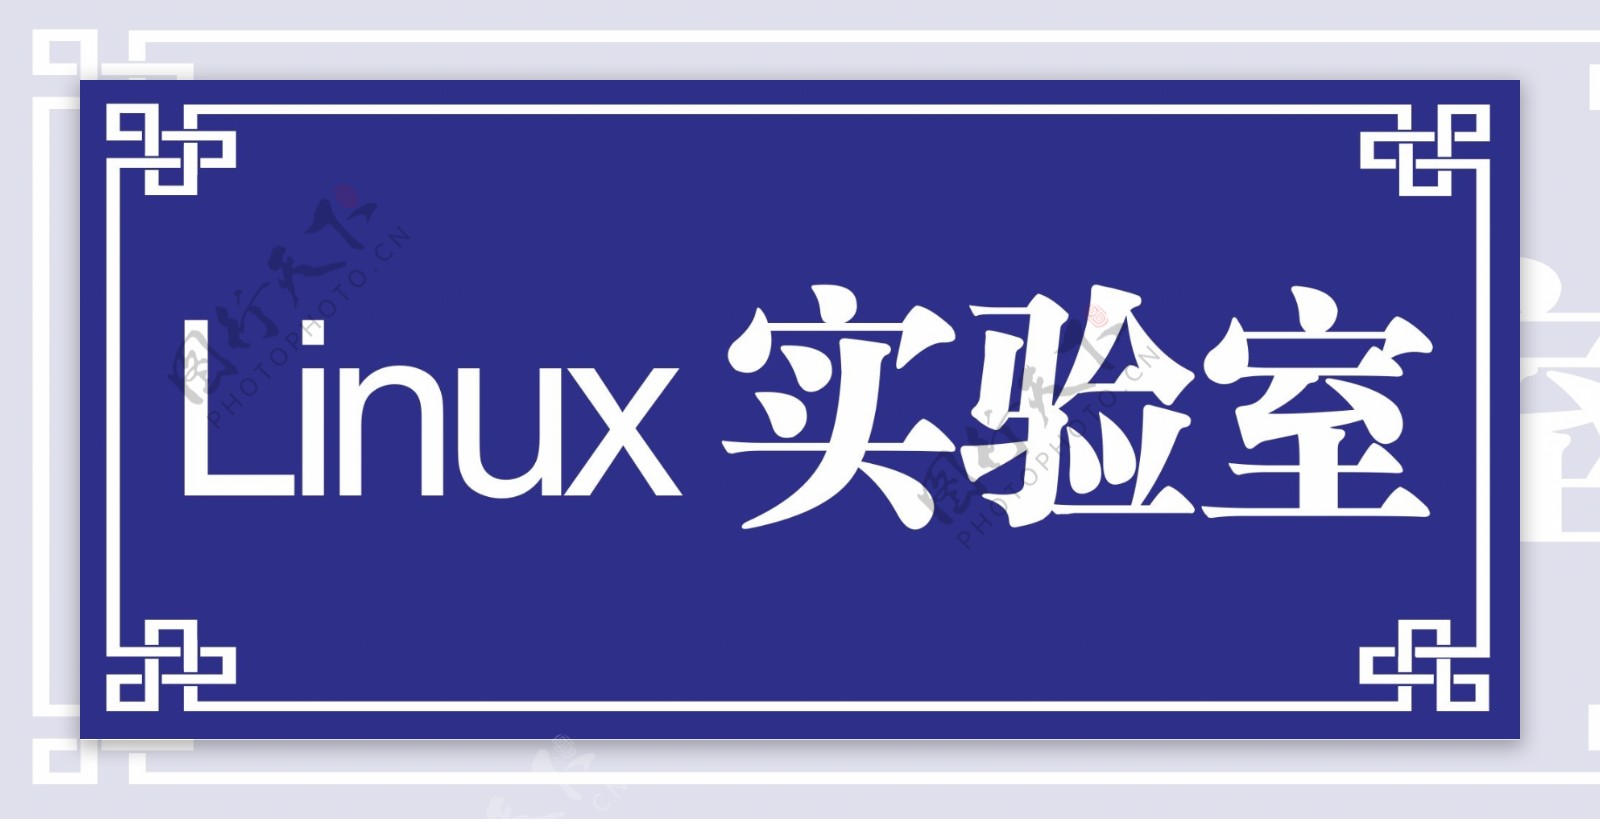 Linux实验室门牌图片